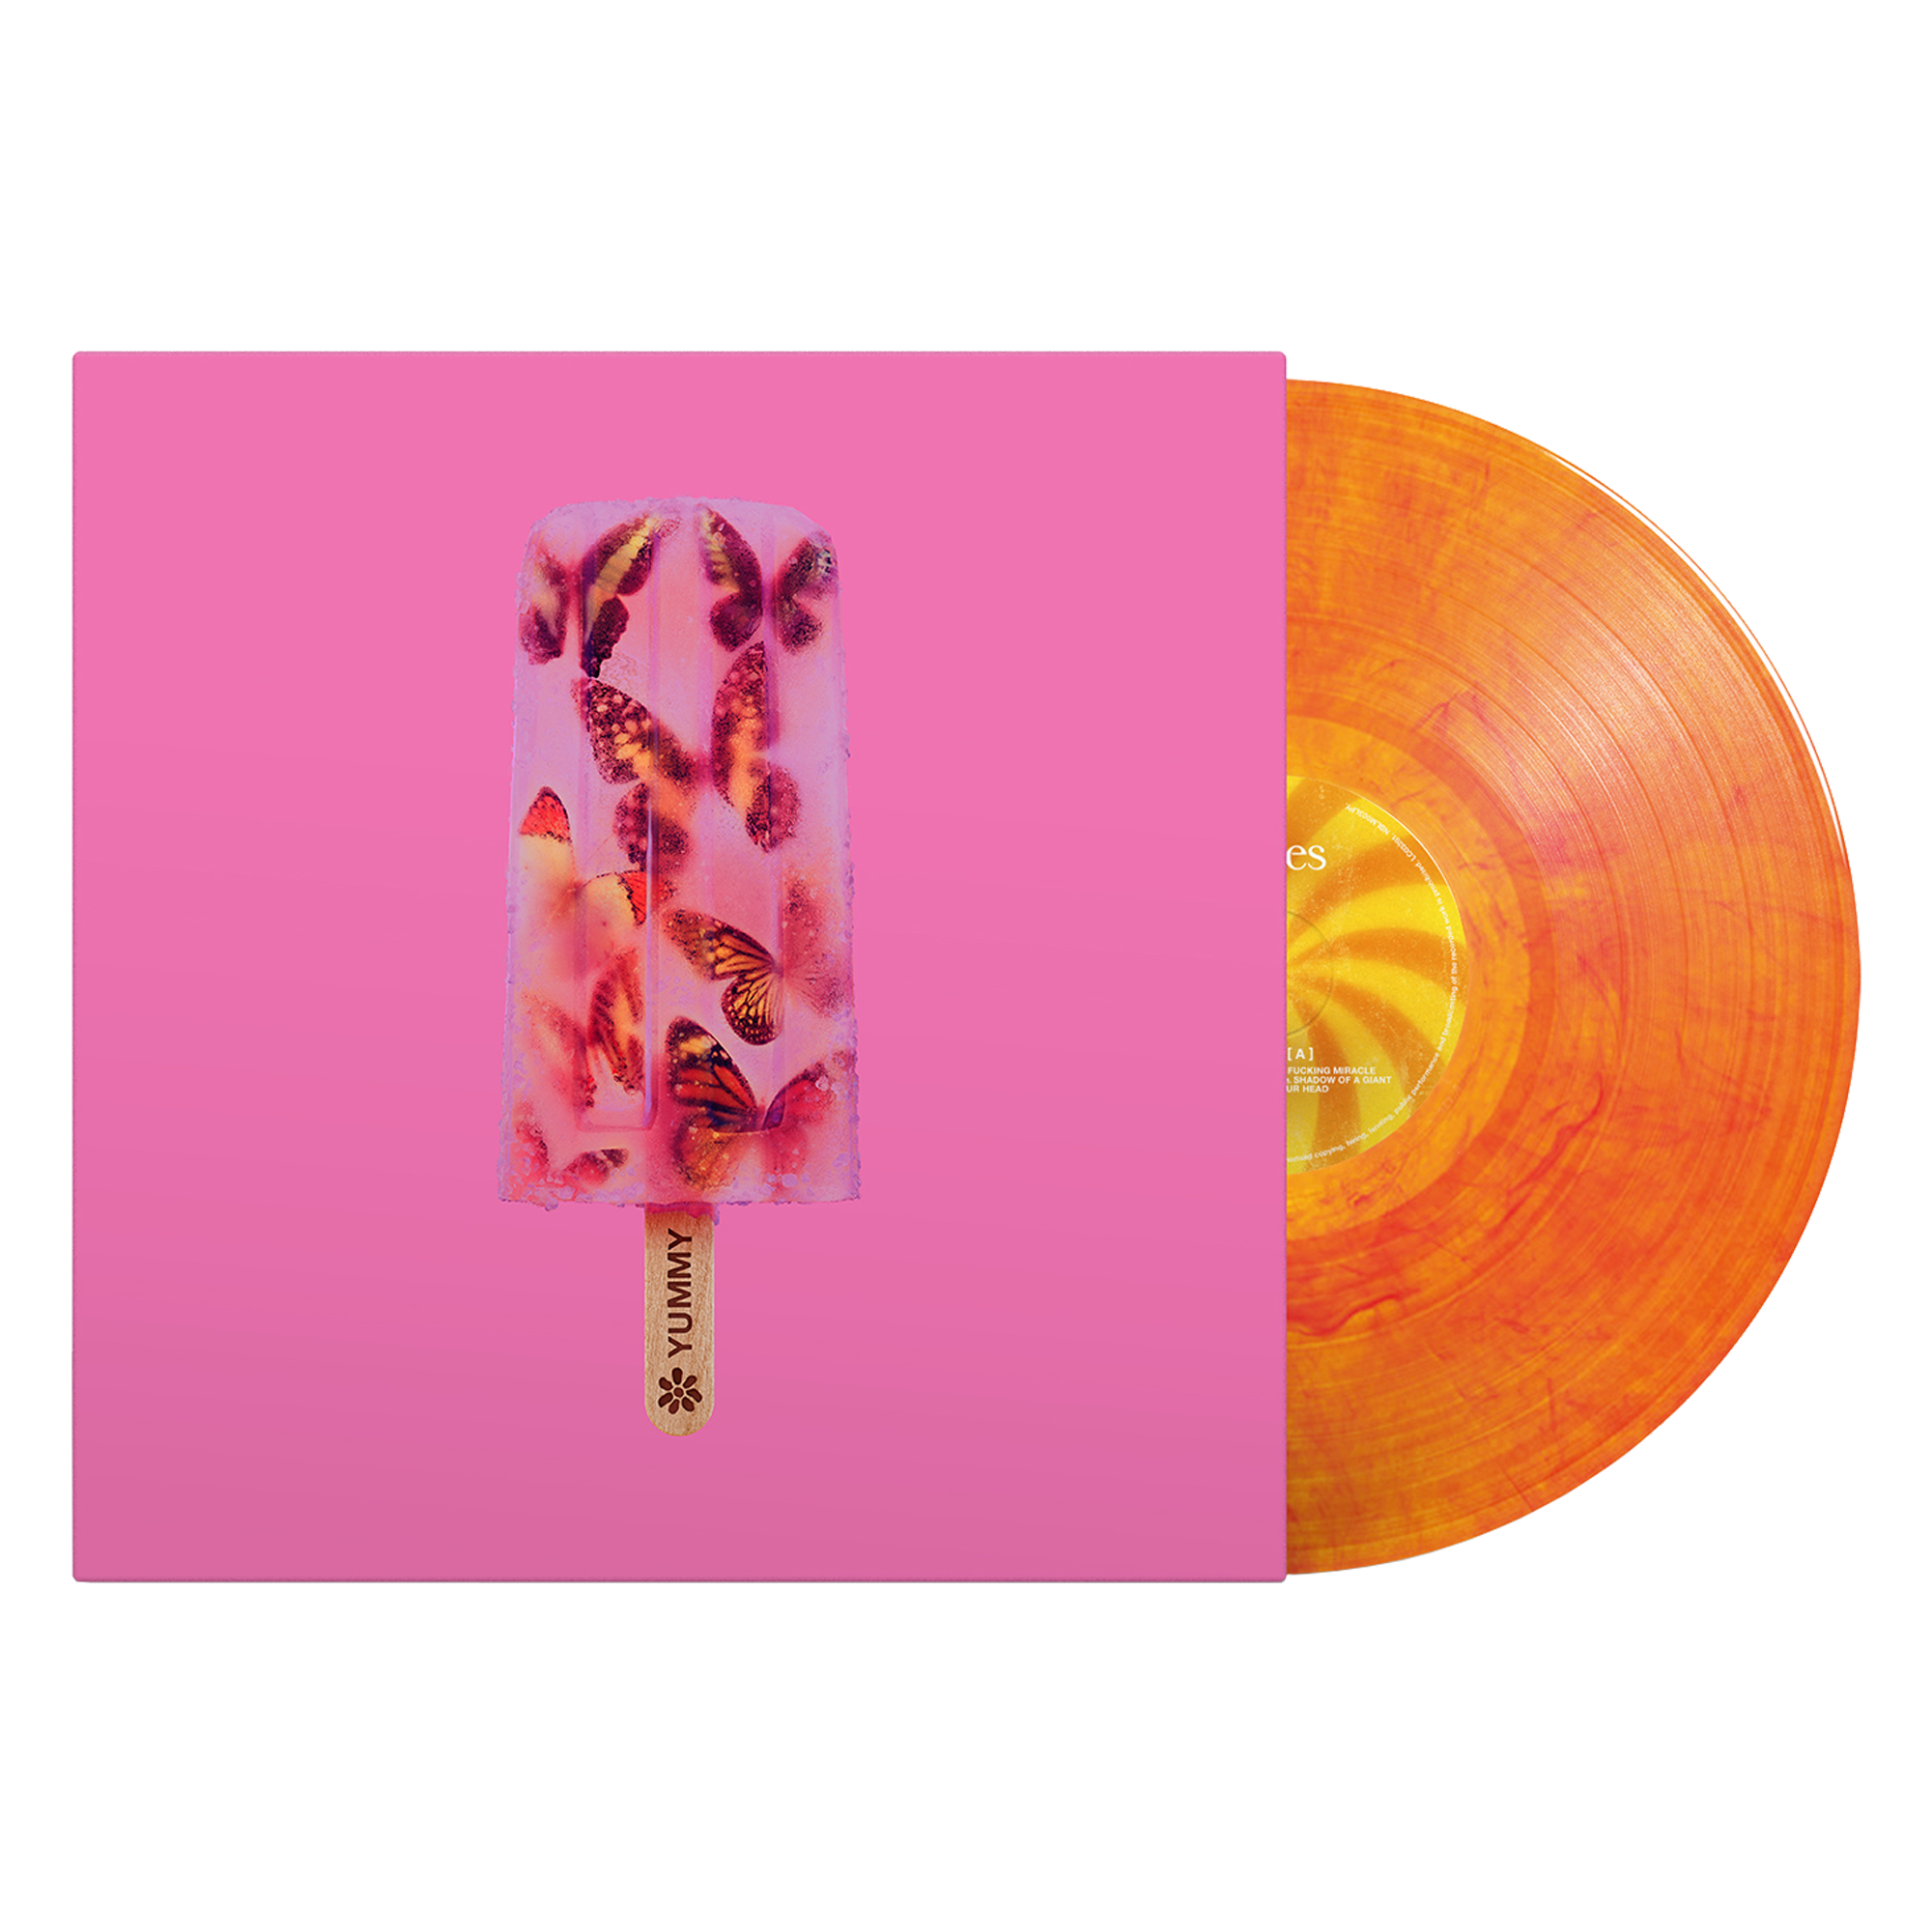 James - Yummy: Limited Marble Orange Vinyl LP